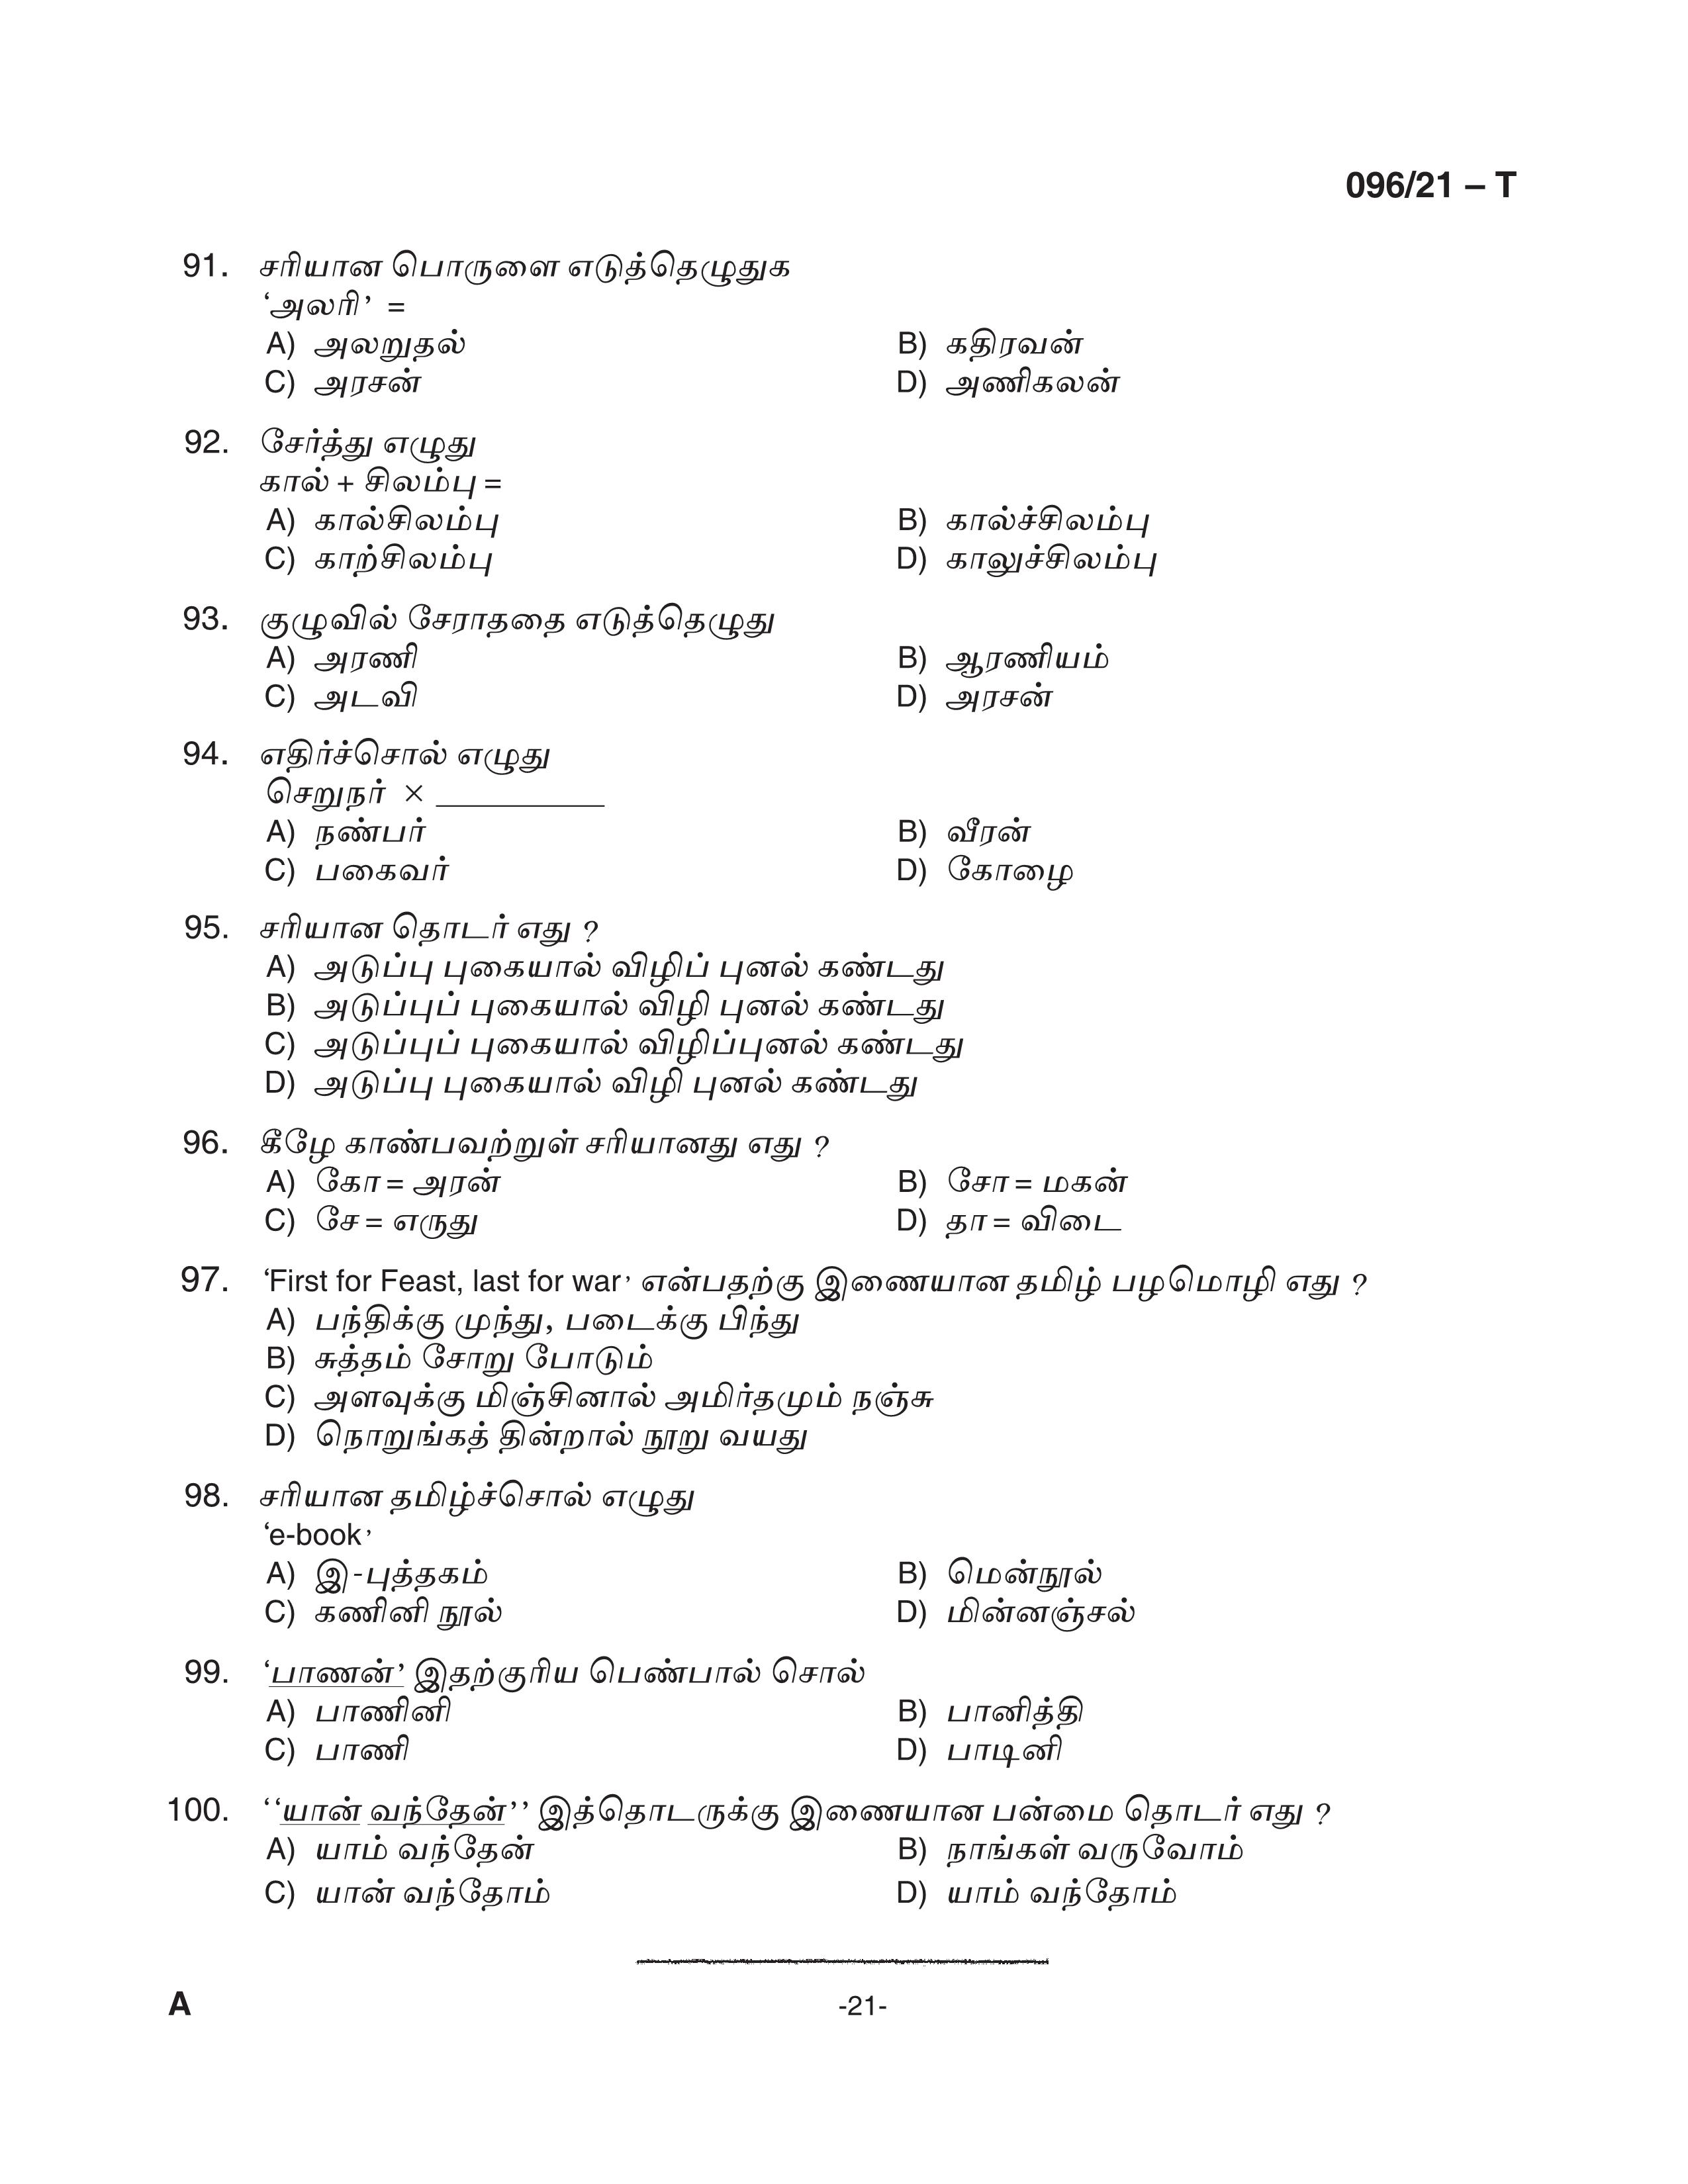 KPSC Degree Level Preliminary Exam Stage II Tamil Exam 2021 Code 09621 T 21